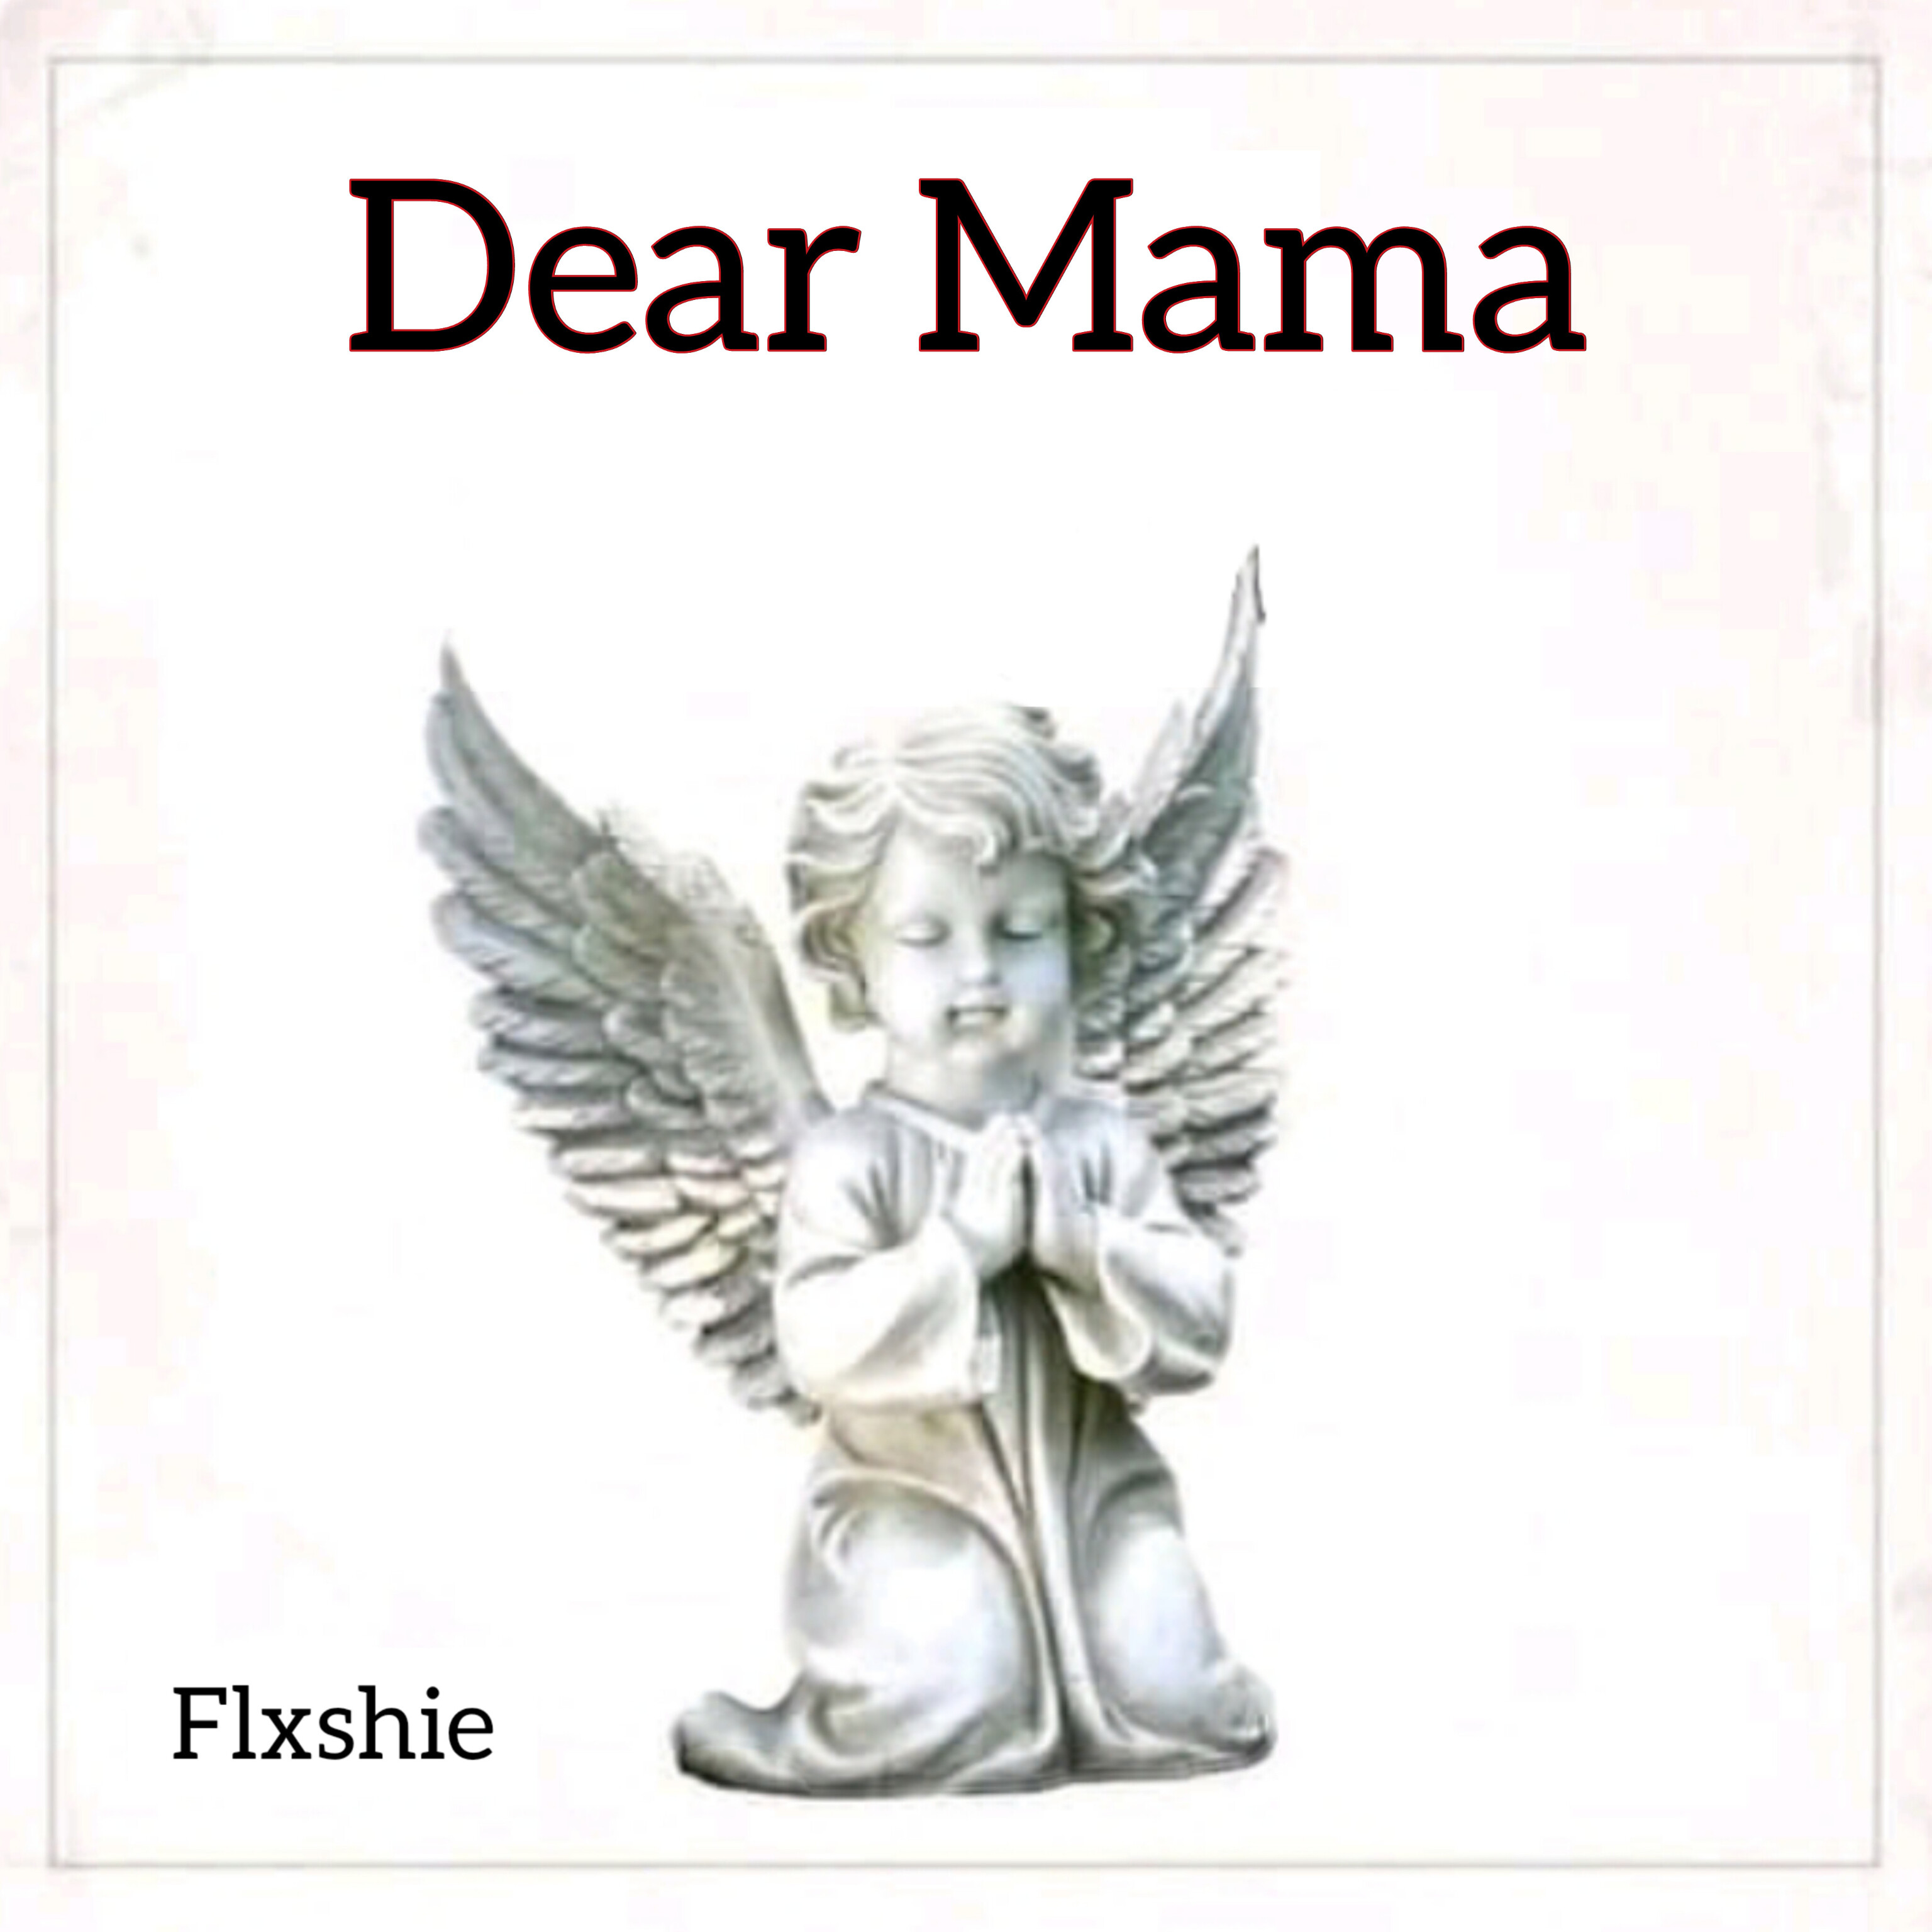 Dear Mama - Flxshie